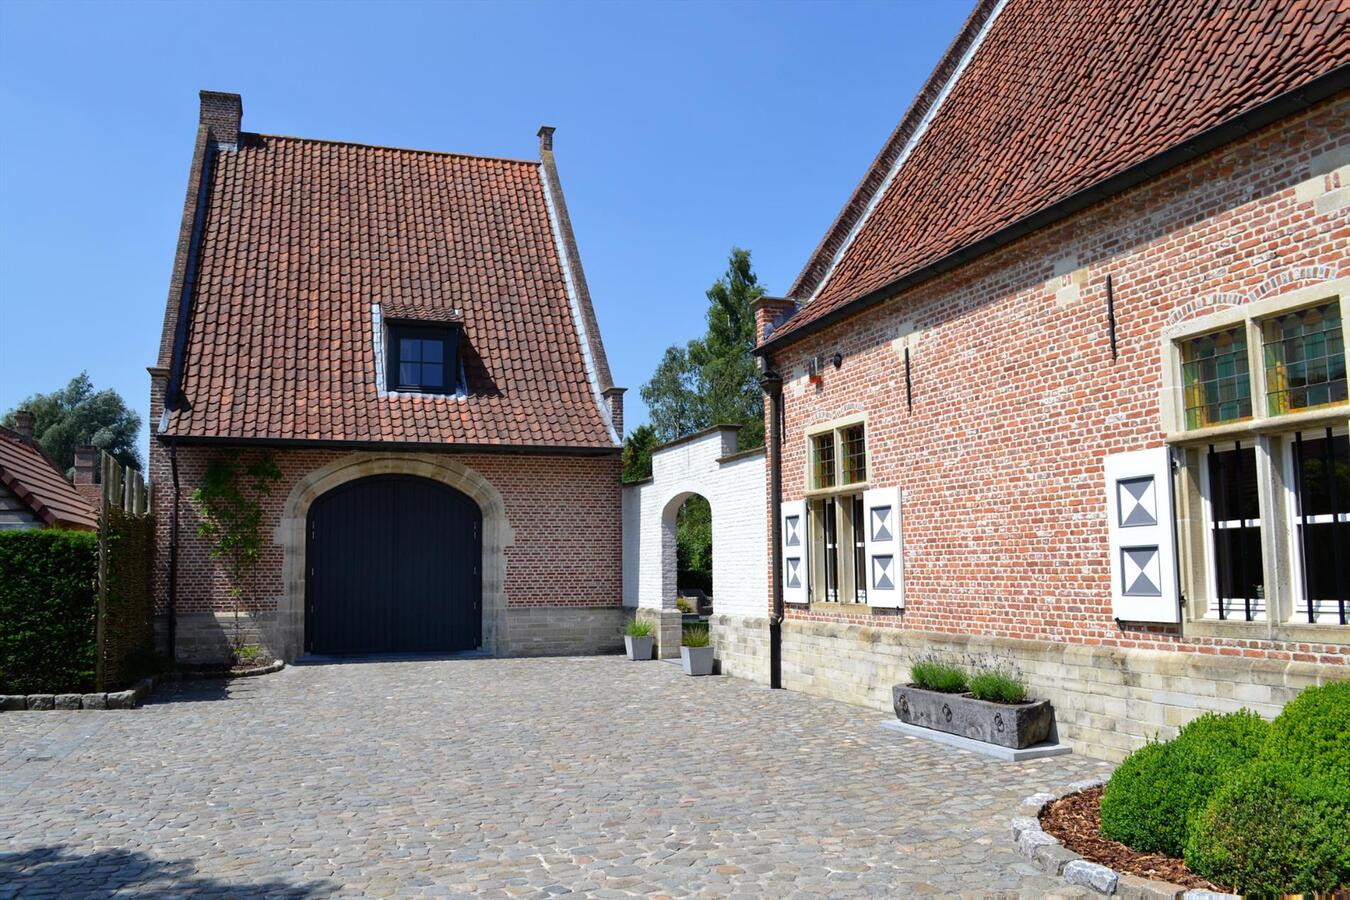 Property sold in Lokeren